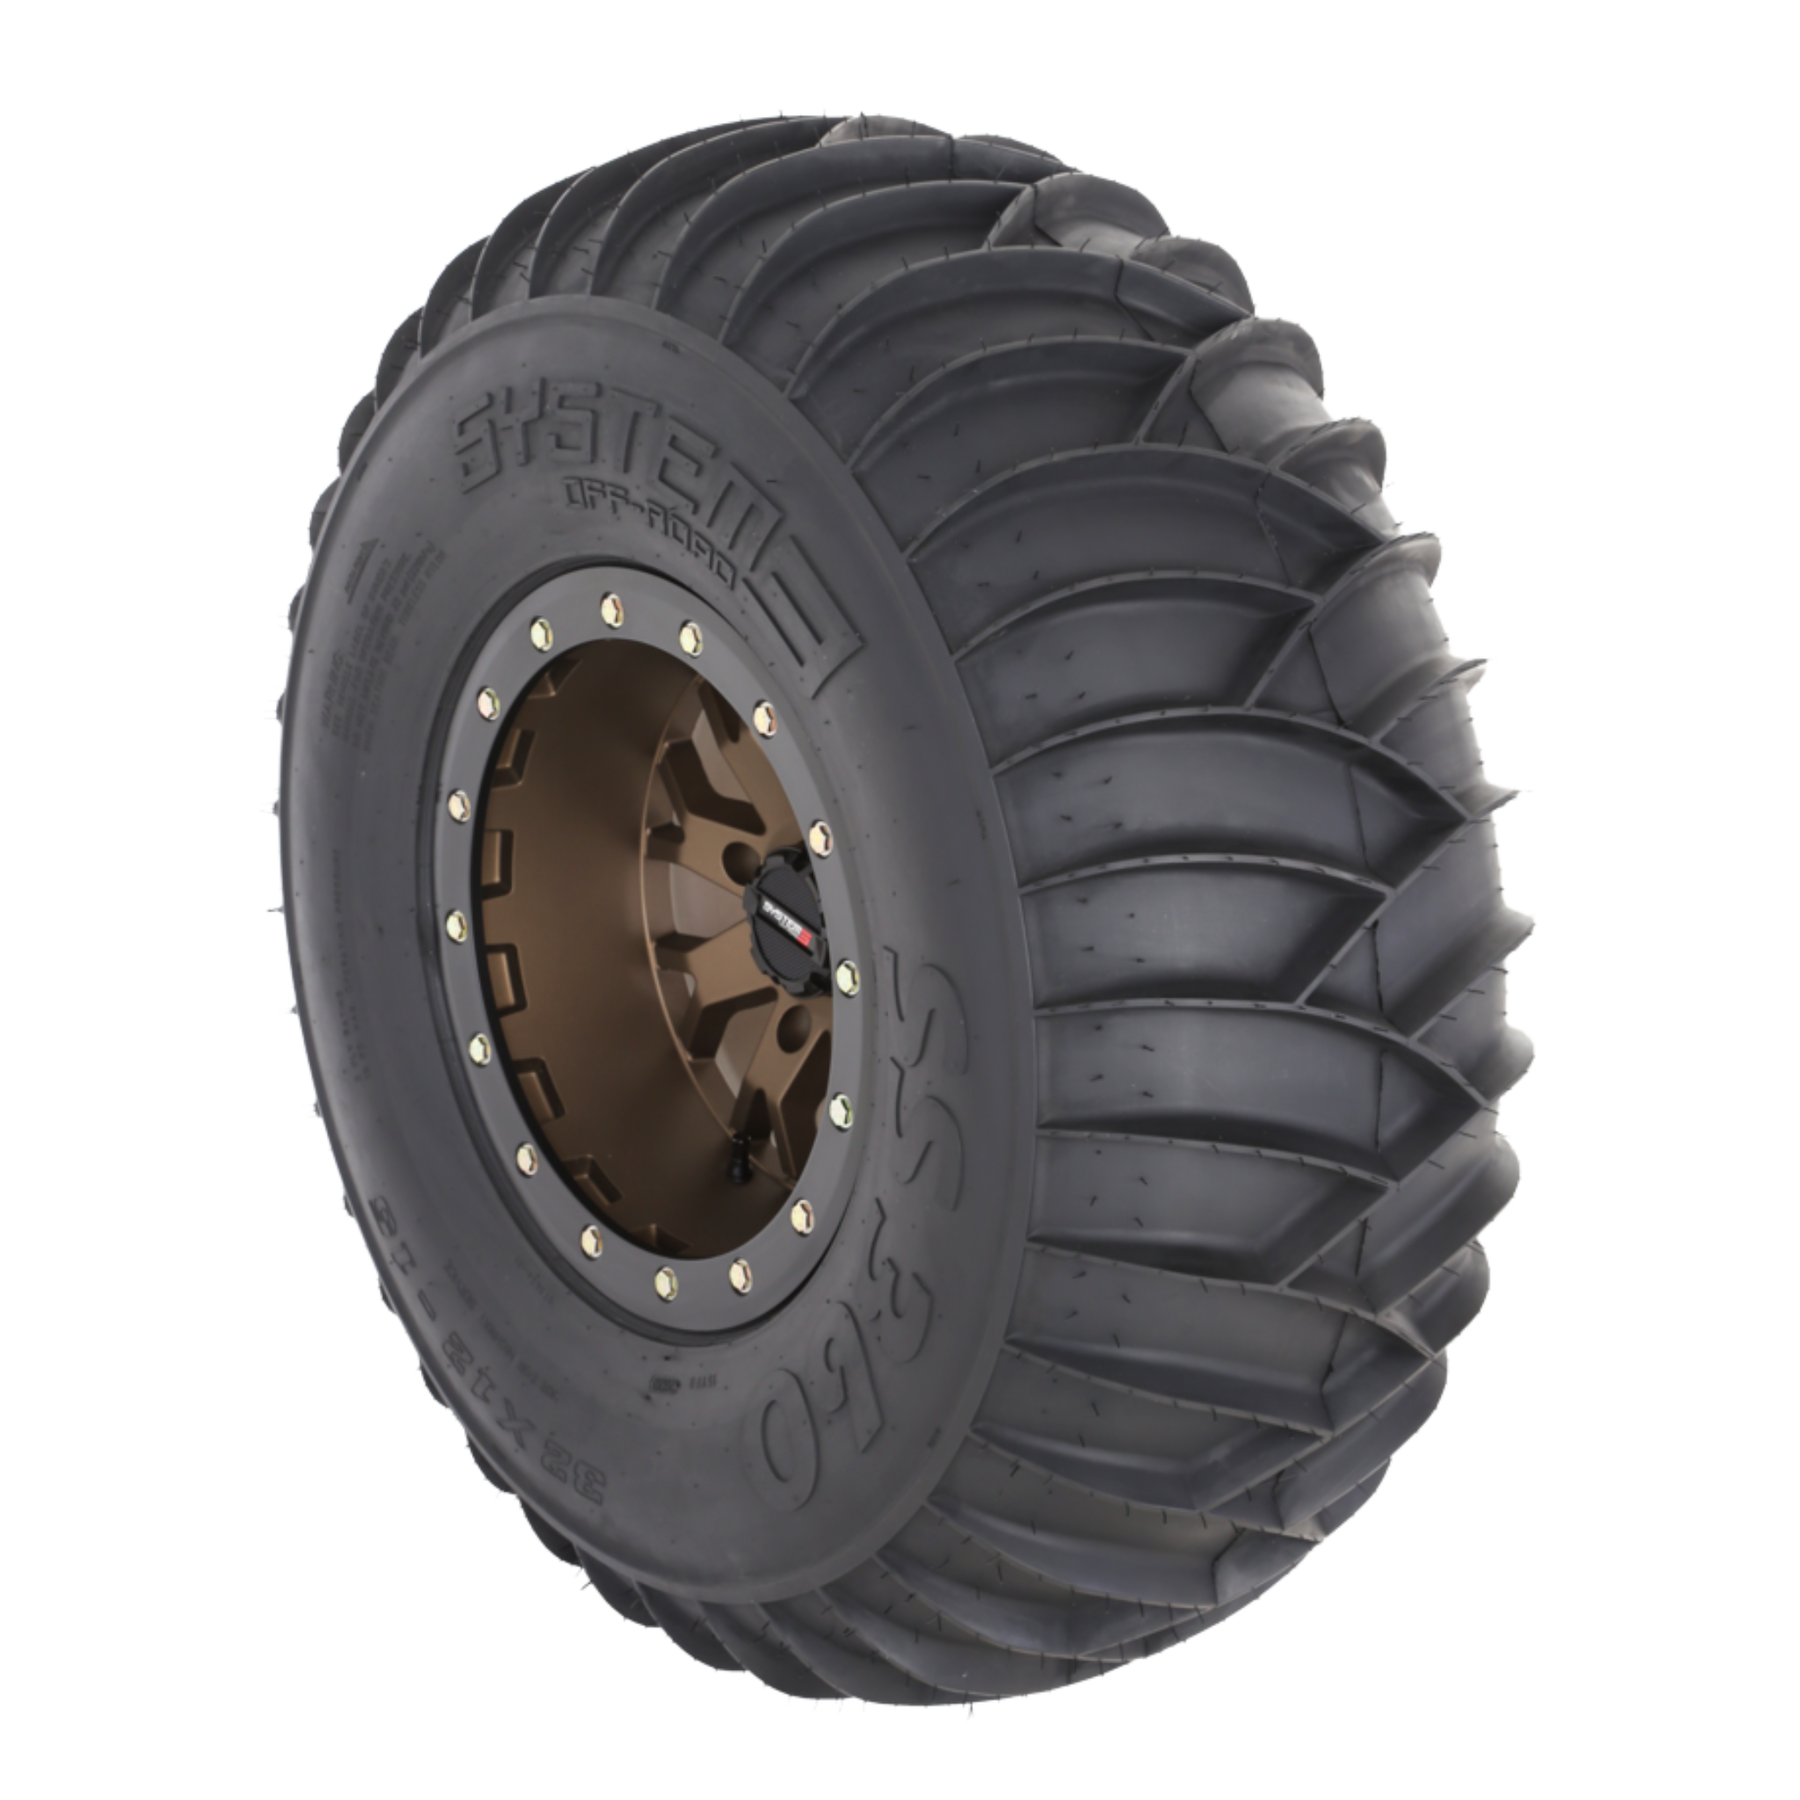 SS360 Sand/Snow Tires